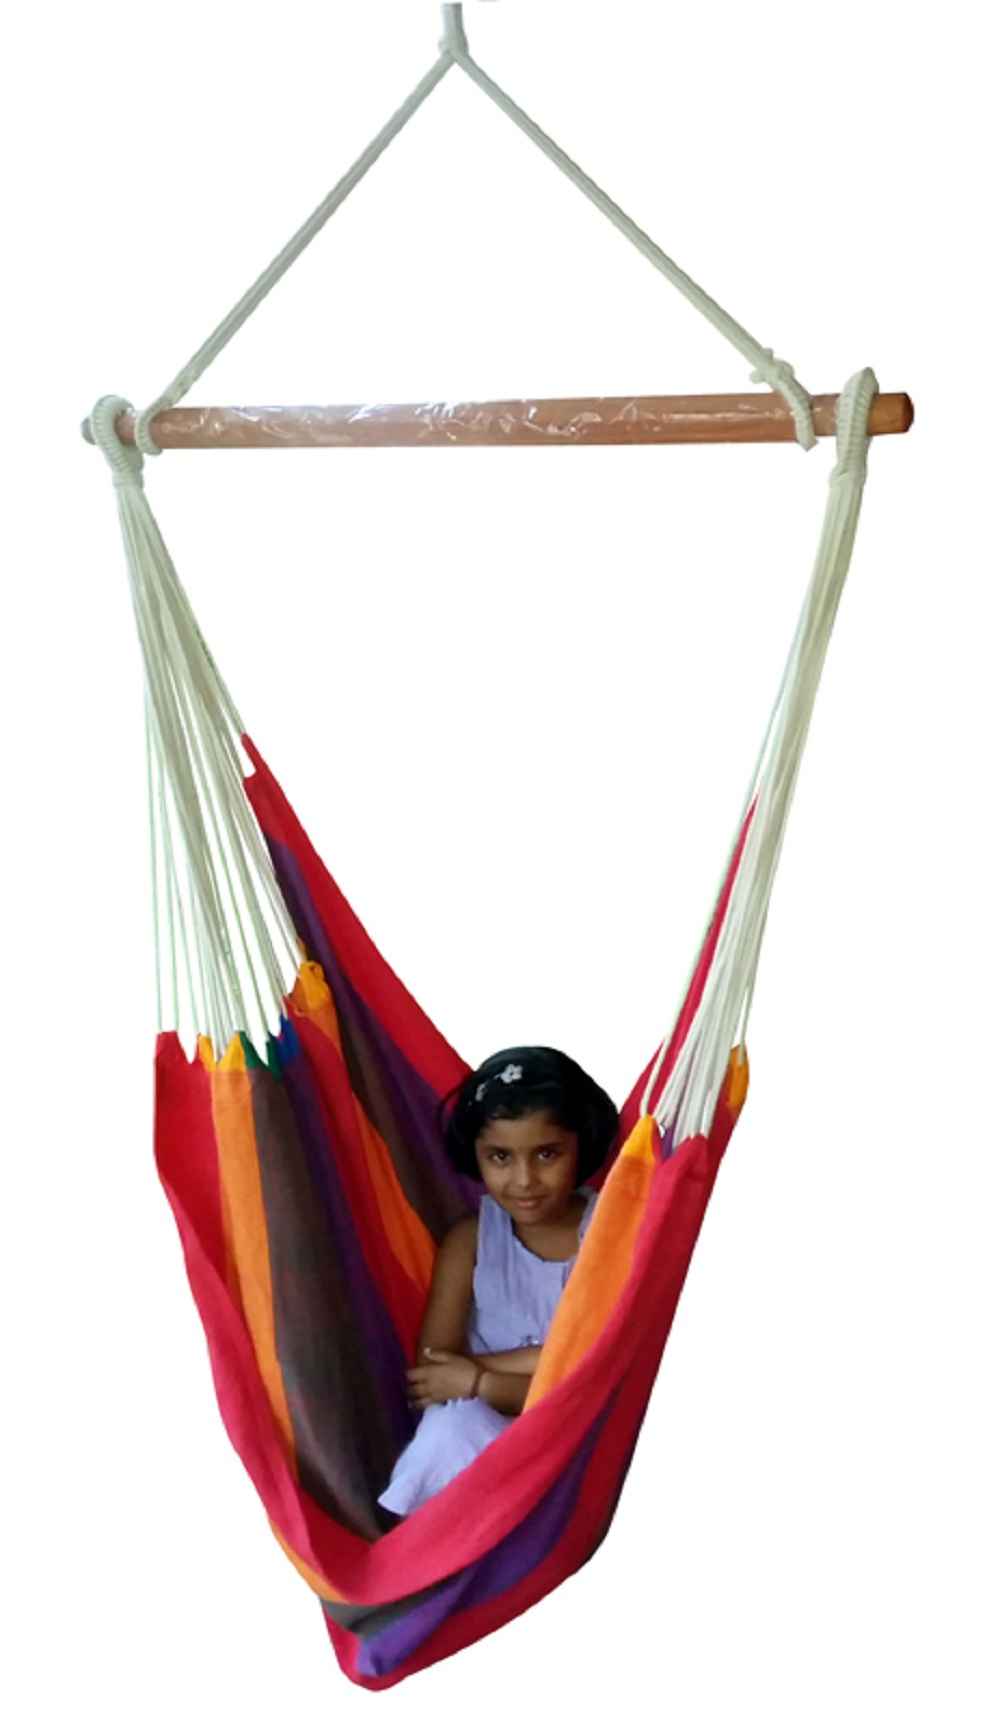 Hangit Cotton Canvas Swing Chair- Multistripe